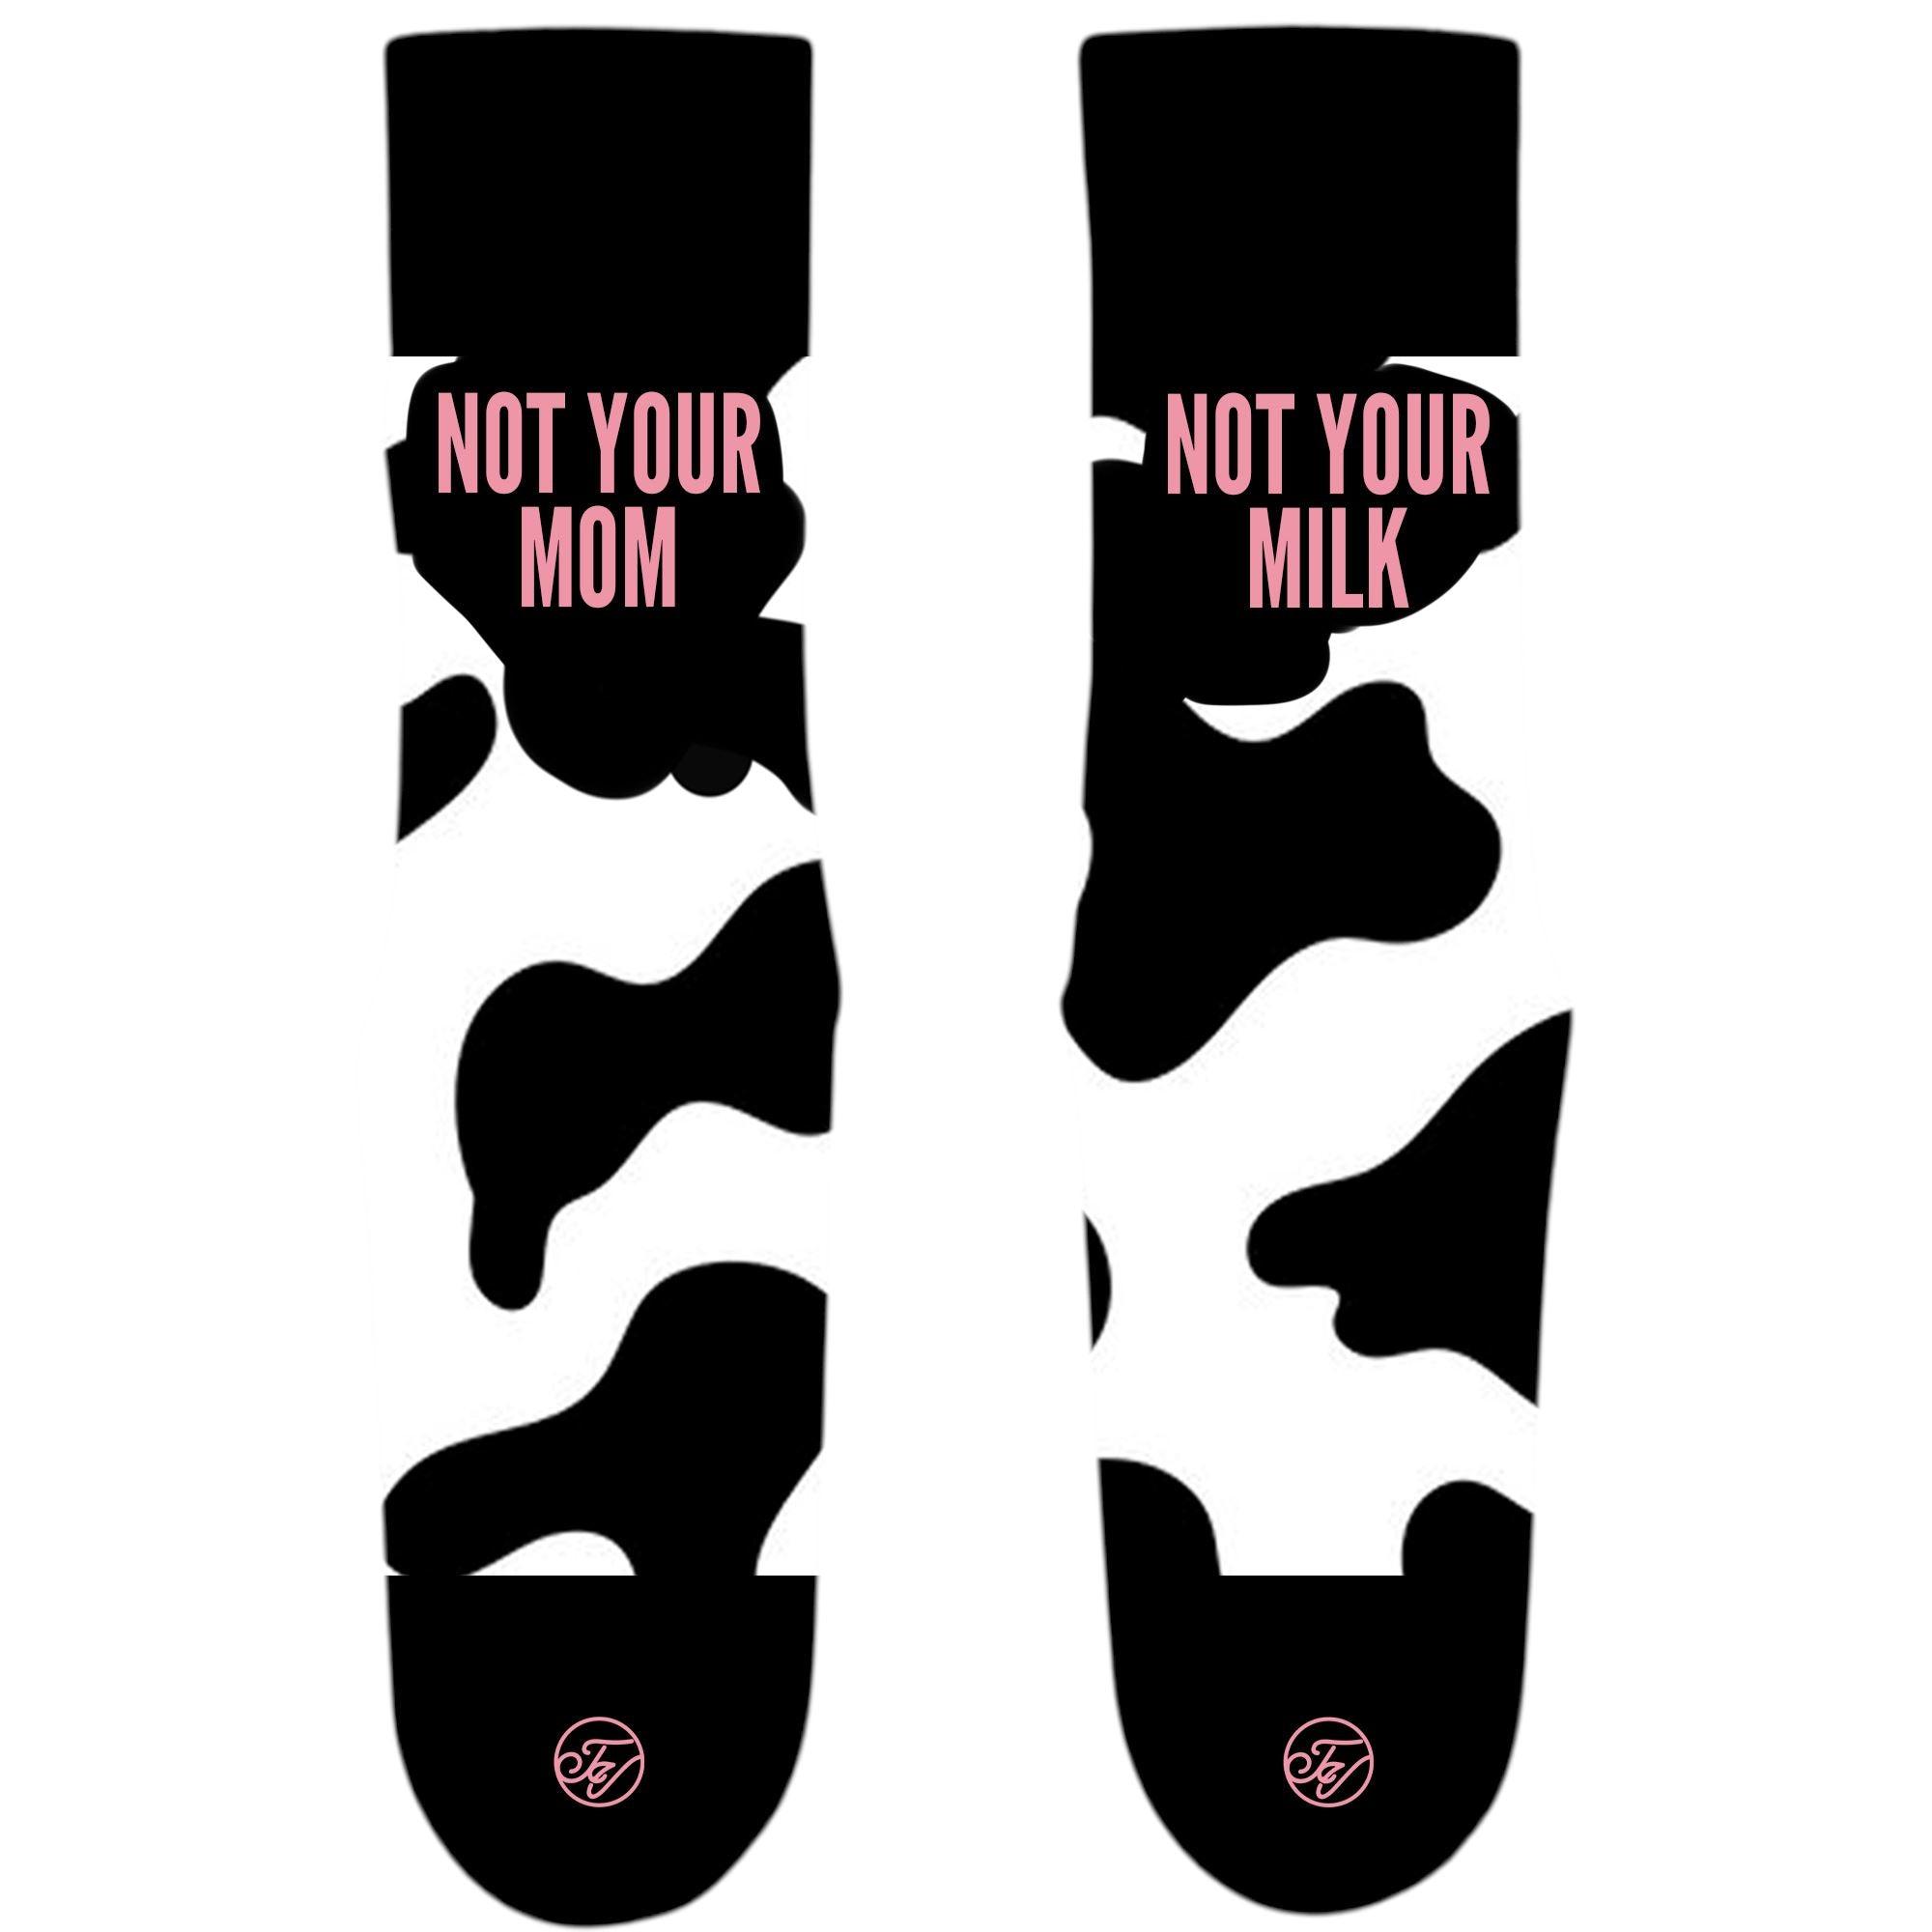 Not your mom not your milk - Socken aus Bio-Baumwolle - 2er Set - Team Vegan © vegan t shirt